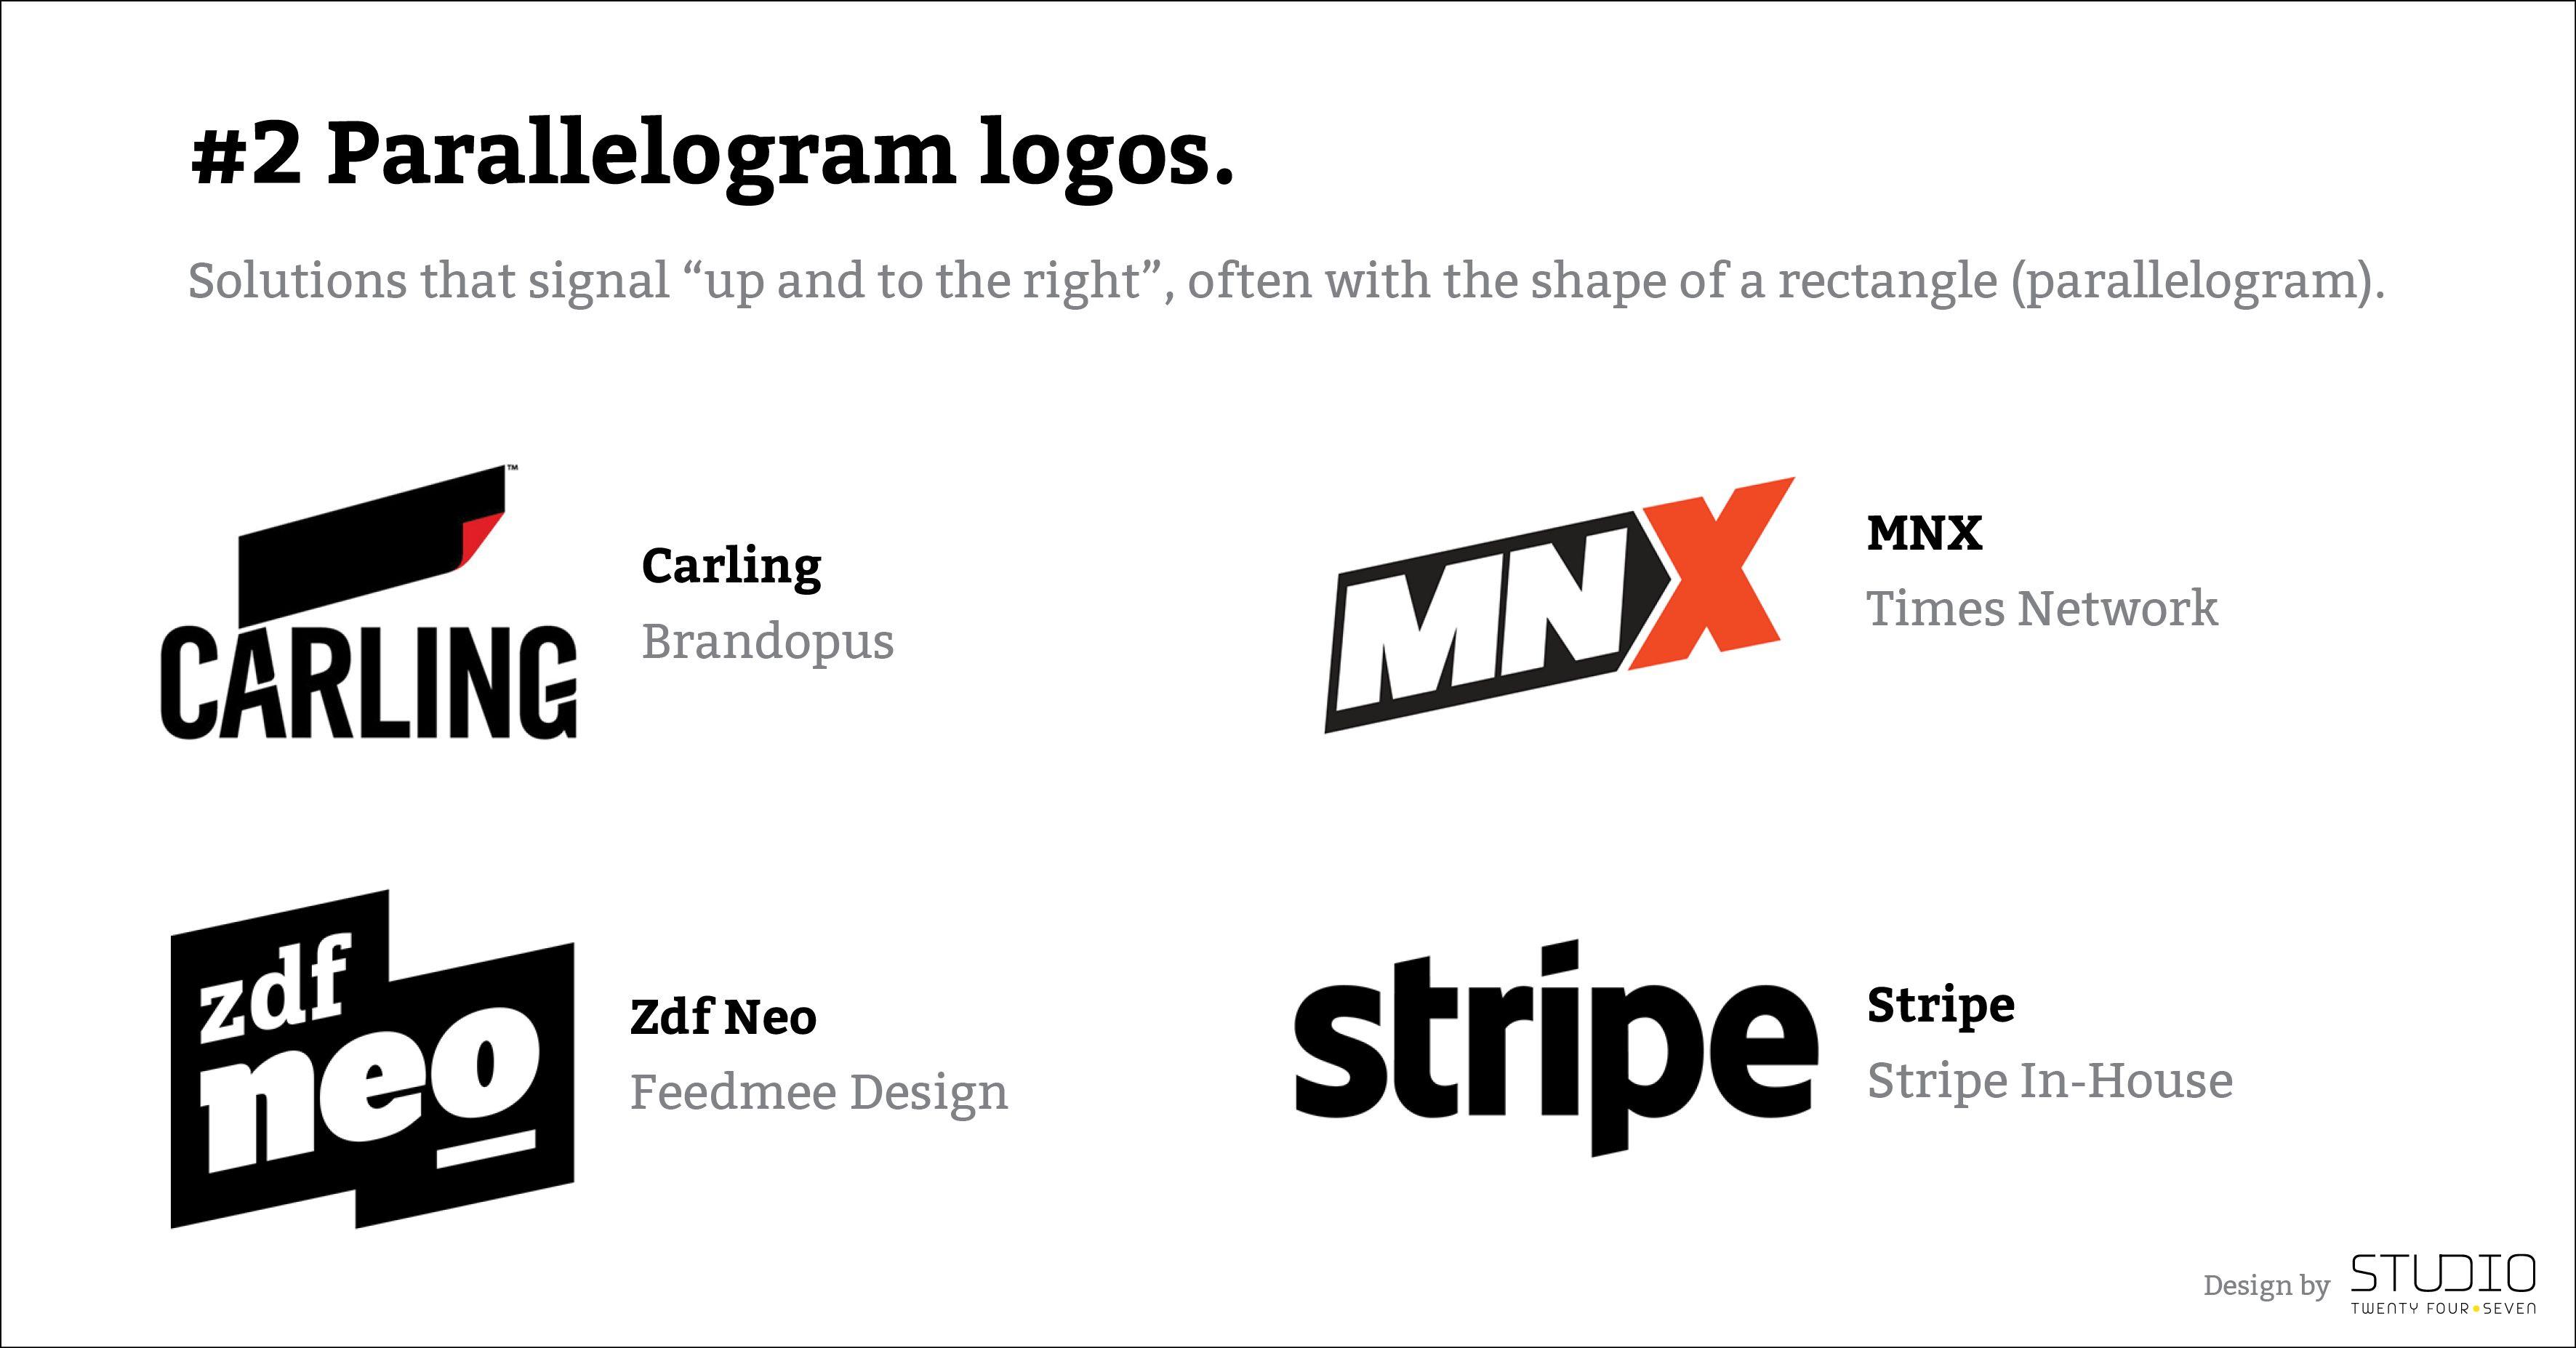 Parallelogram Logo - Amazing logo trends in 2018 - Studio Twenty Four Seven